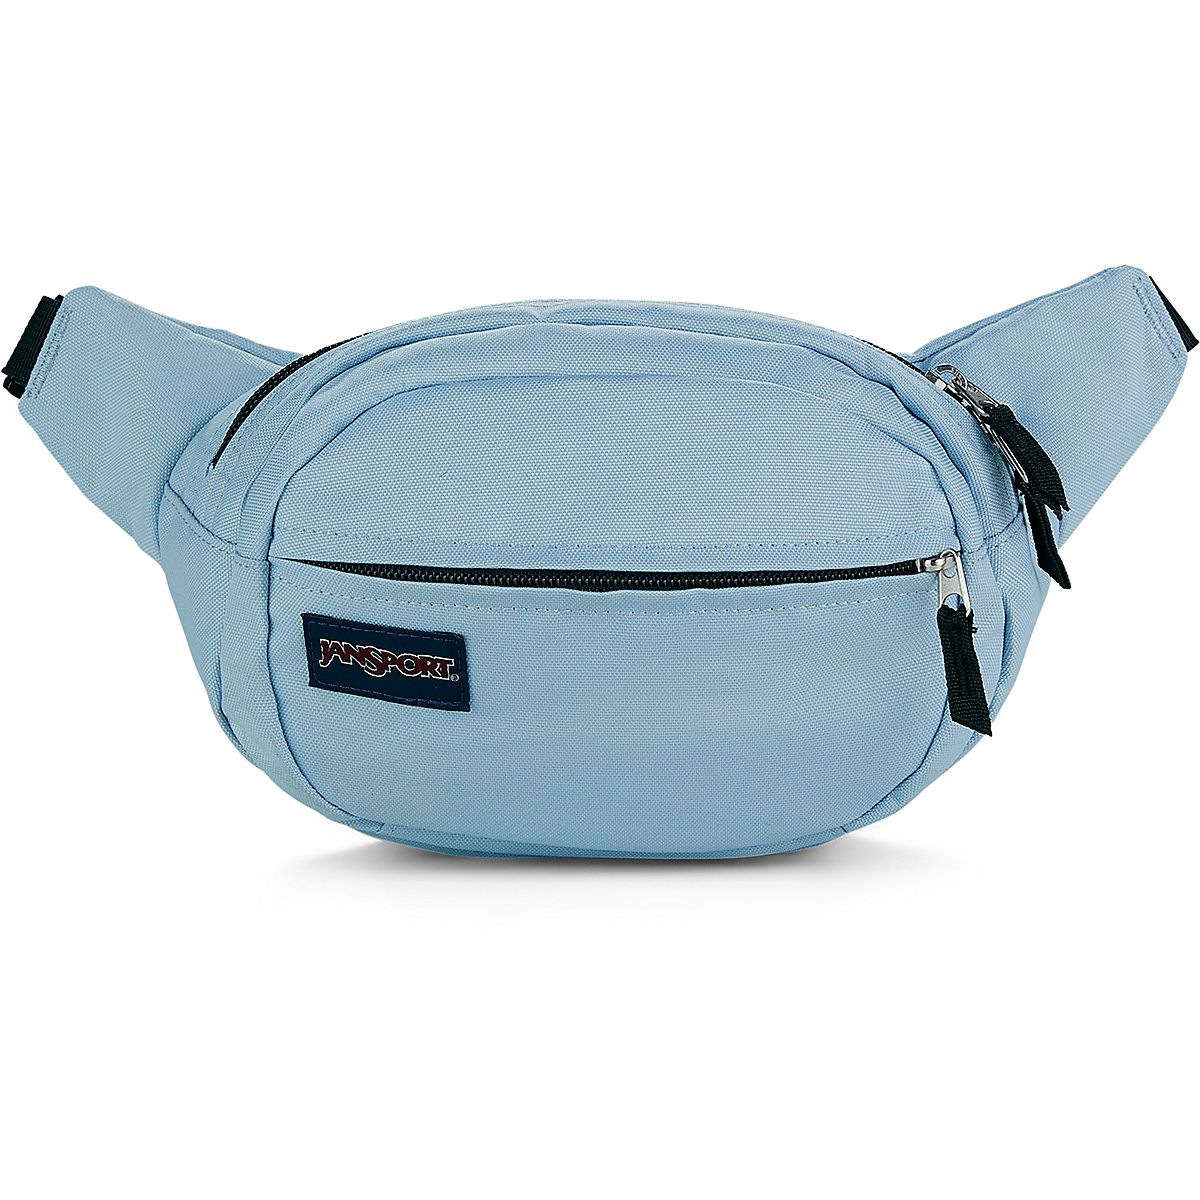 JanSport Fifth Avenue Fanny Pack Crossbody Bags for Women, Men, City Lights  - Stylish, Durable Waist Bag with Adjustable Belt, Main Zippered Pocket